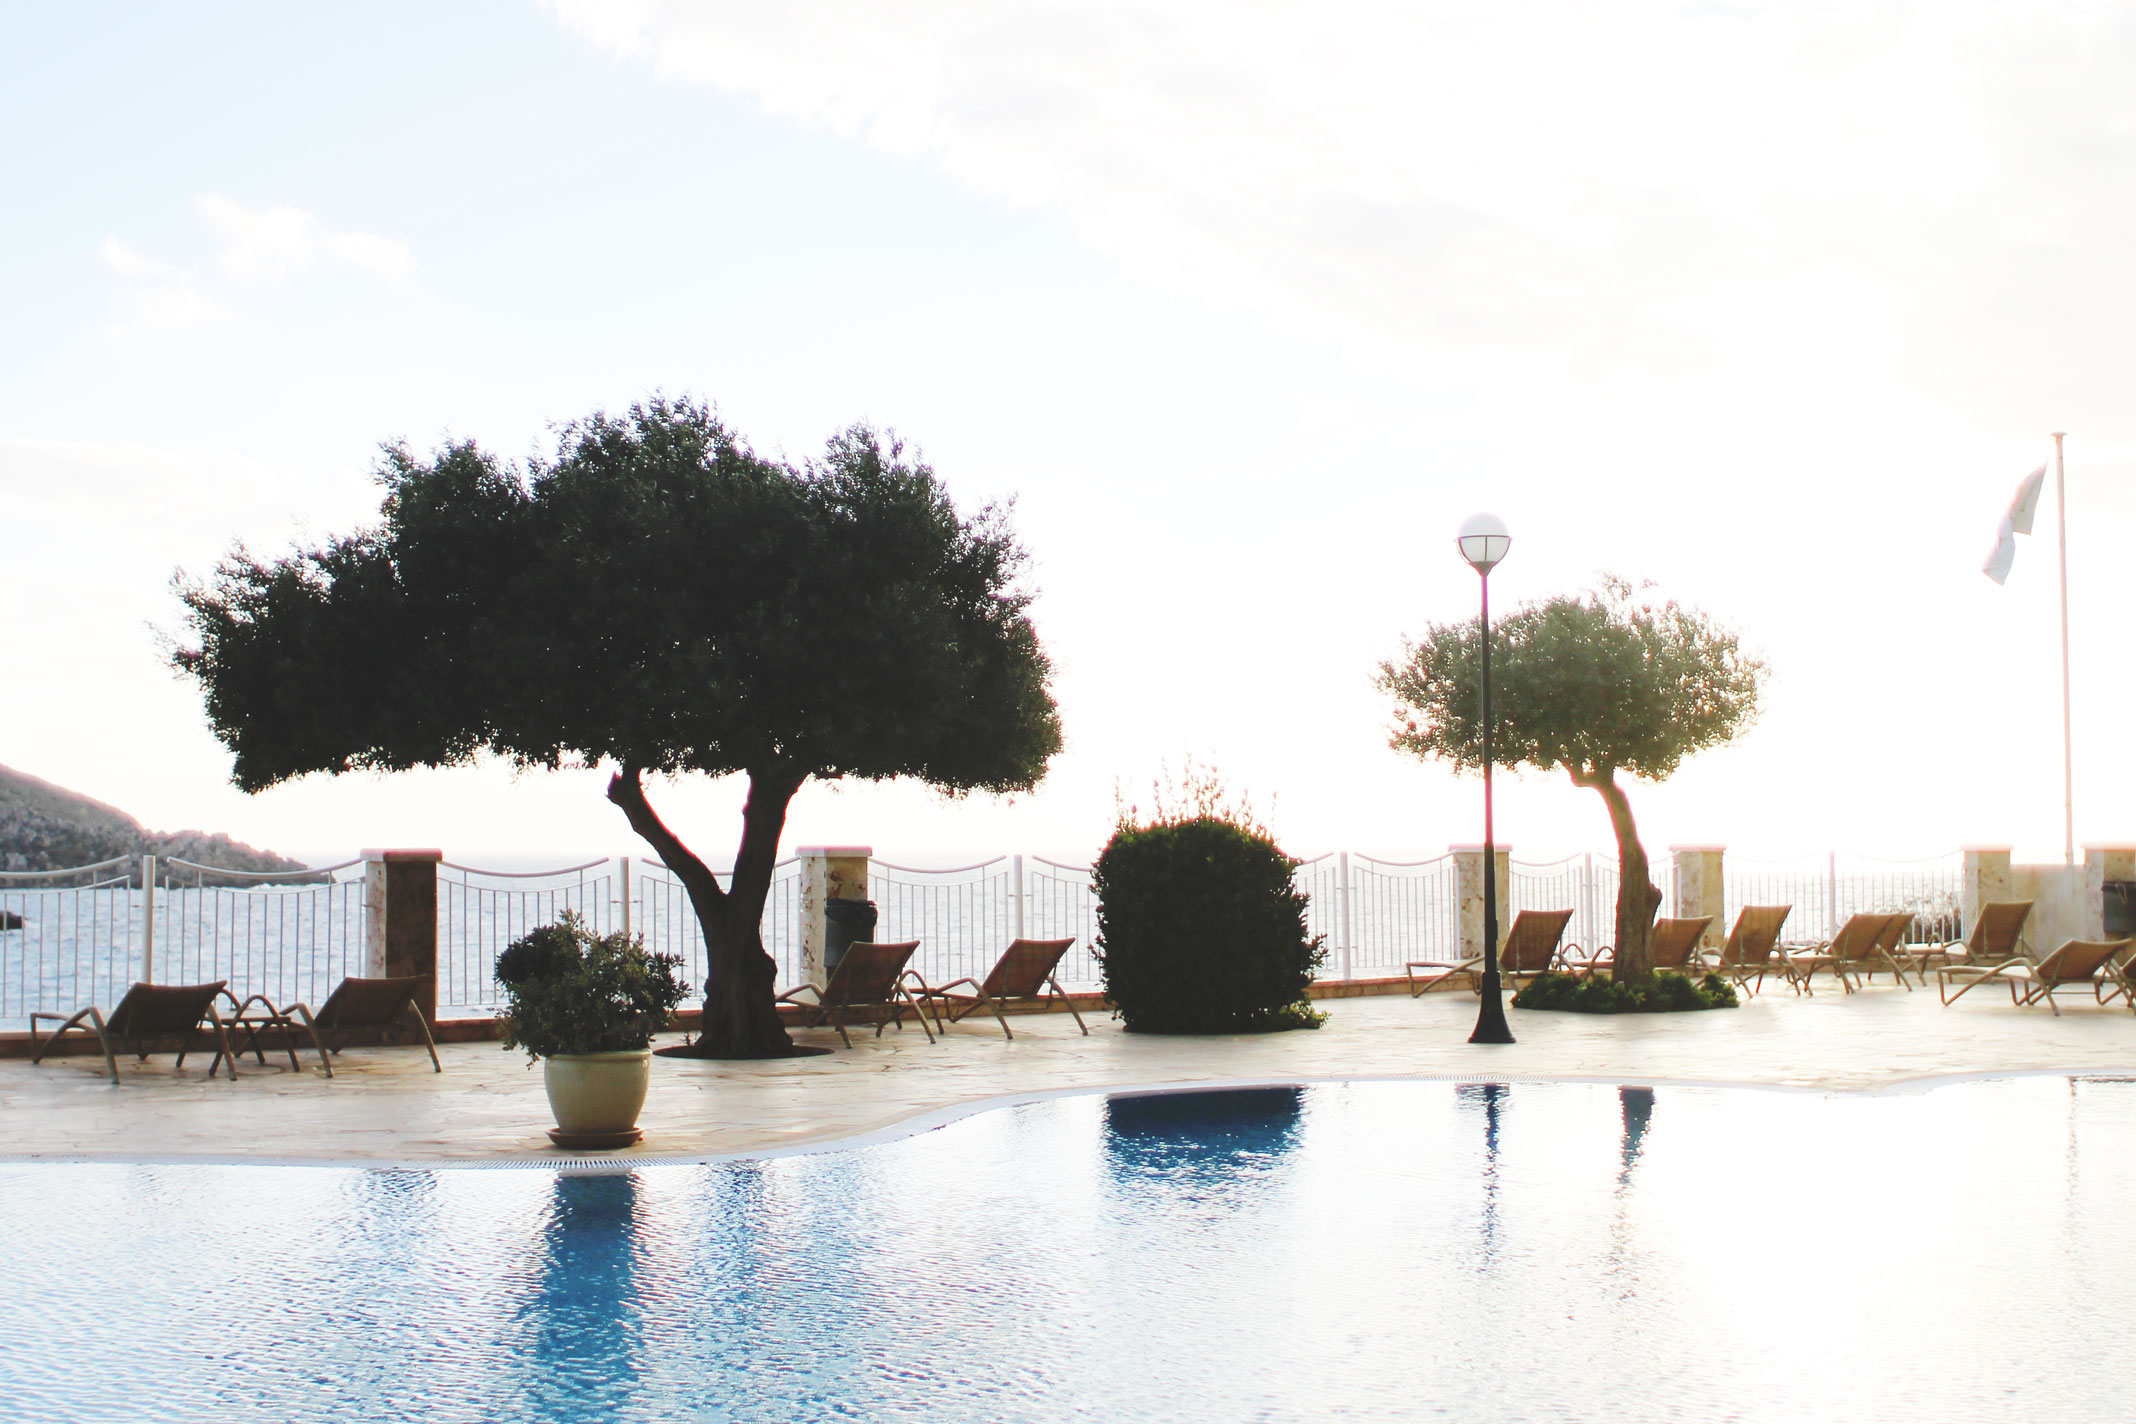 Styleat30 Travel Blog - Radisson Blu Resort & Spa, Malta, Golden Sands Hotel Review - 23